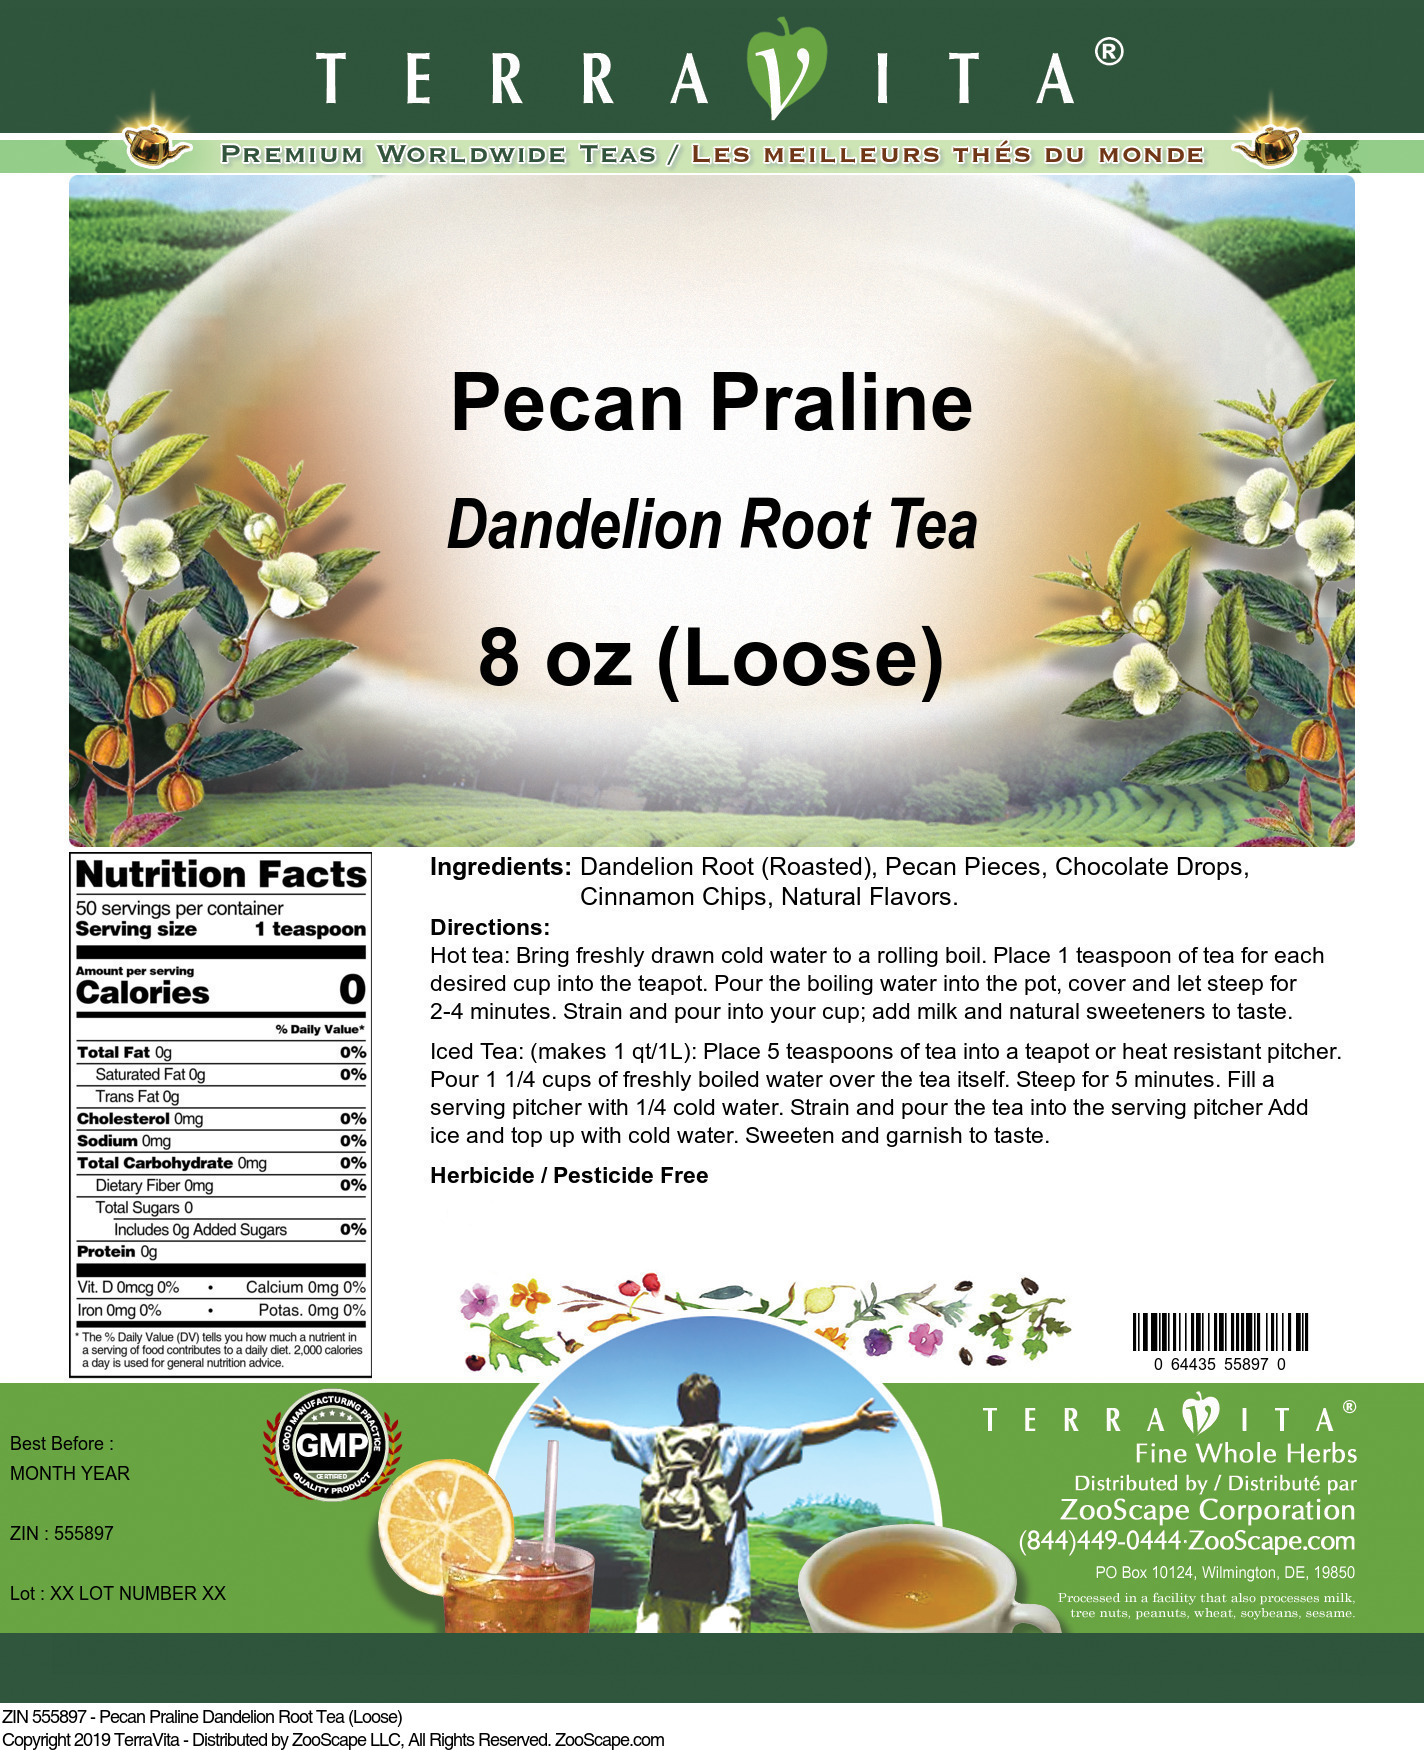 Pecan Praline Dandelion Root Tea (Loose) - Label